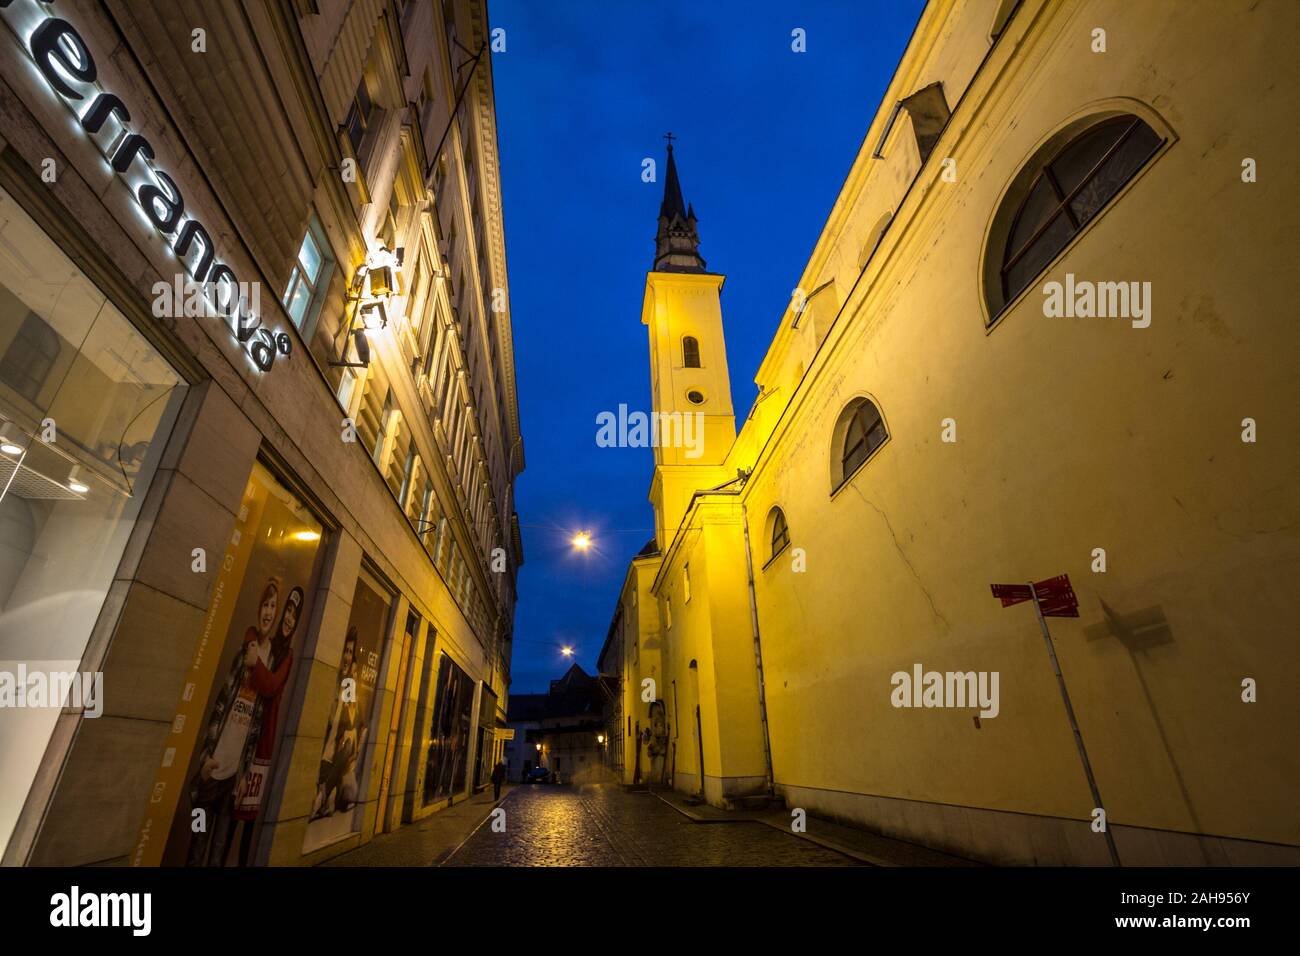 BRNO, CZECHIA - NOVEMBER 5, 2019: Kostel svate mari magdaleny, also called saint mary magdalene church in a Medieval pedestrian narrow street of Brno, Stock Photo